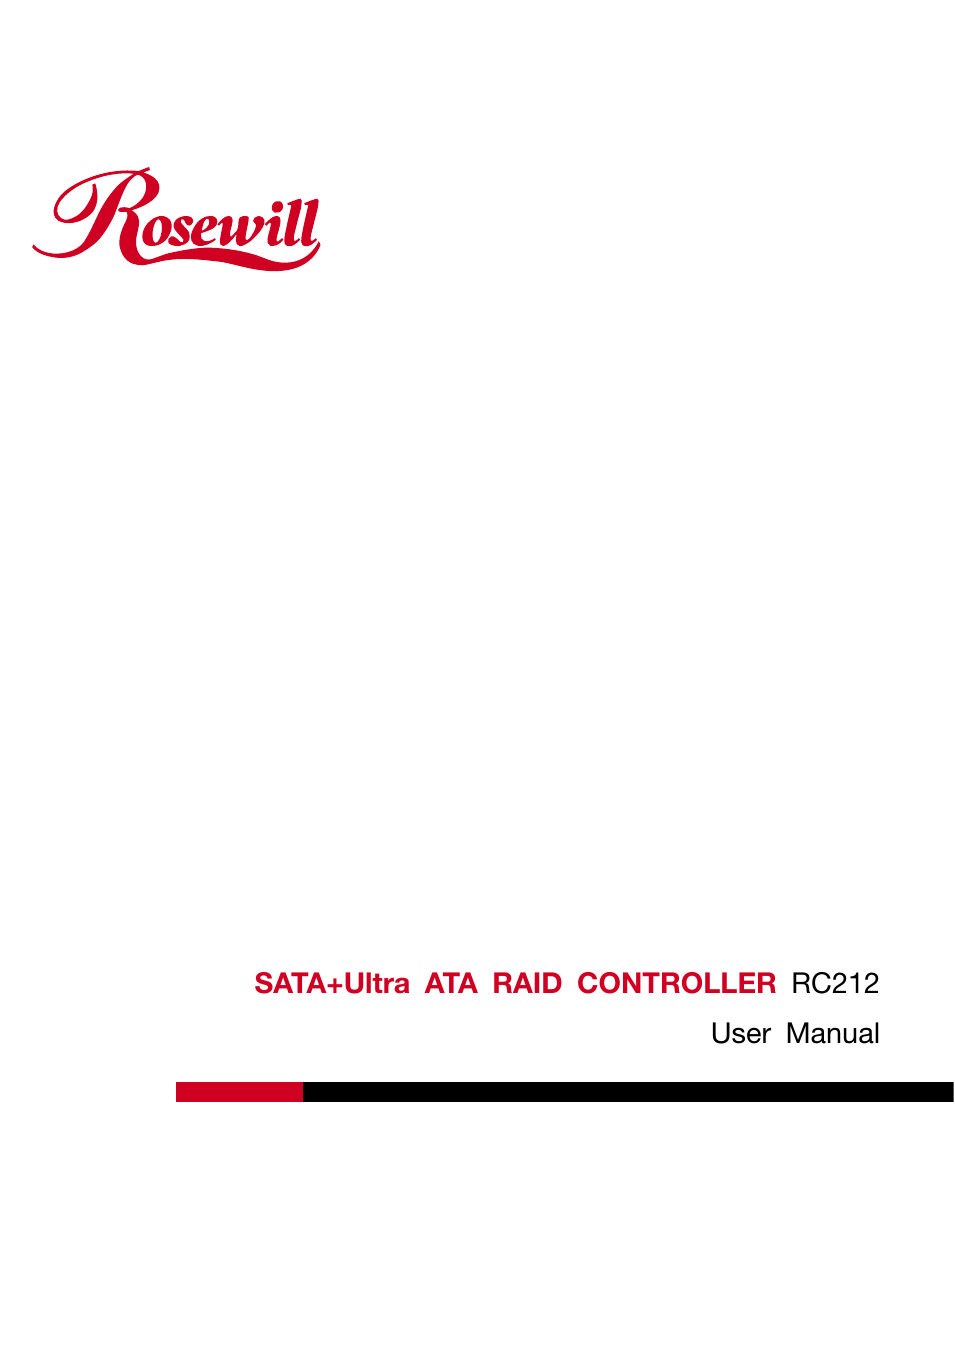 SATA+Ultra ATA Raid Controller RC212